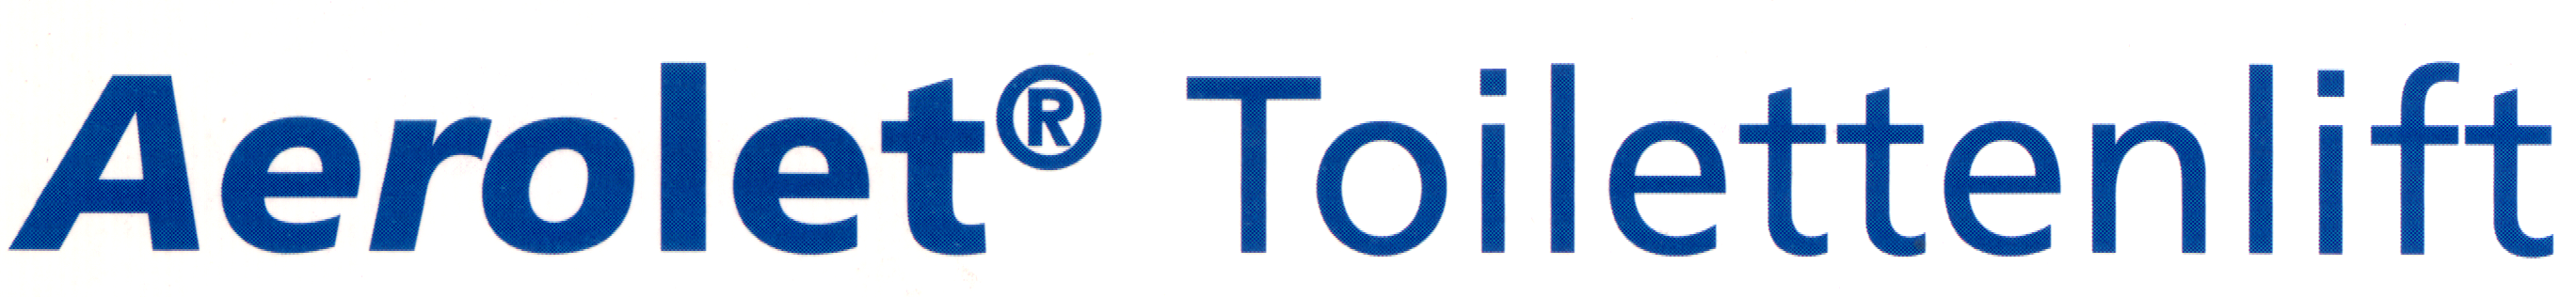 aerolet_logo